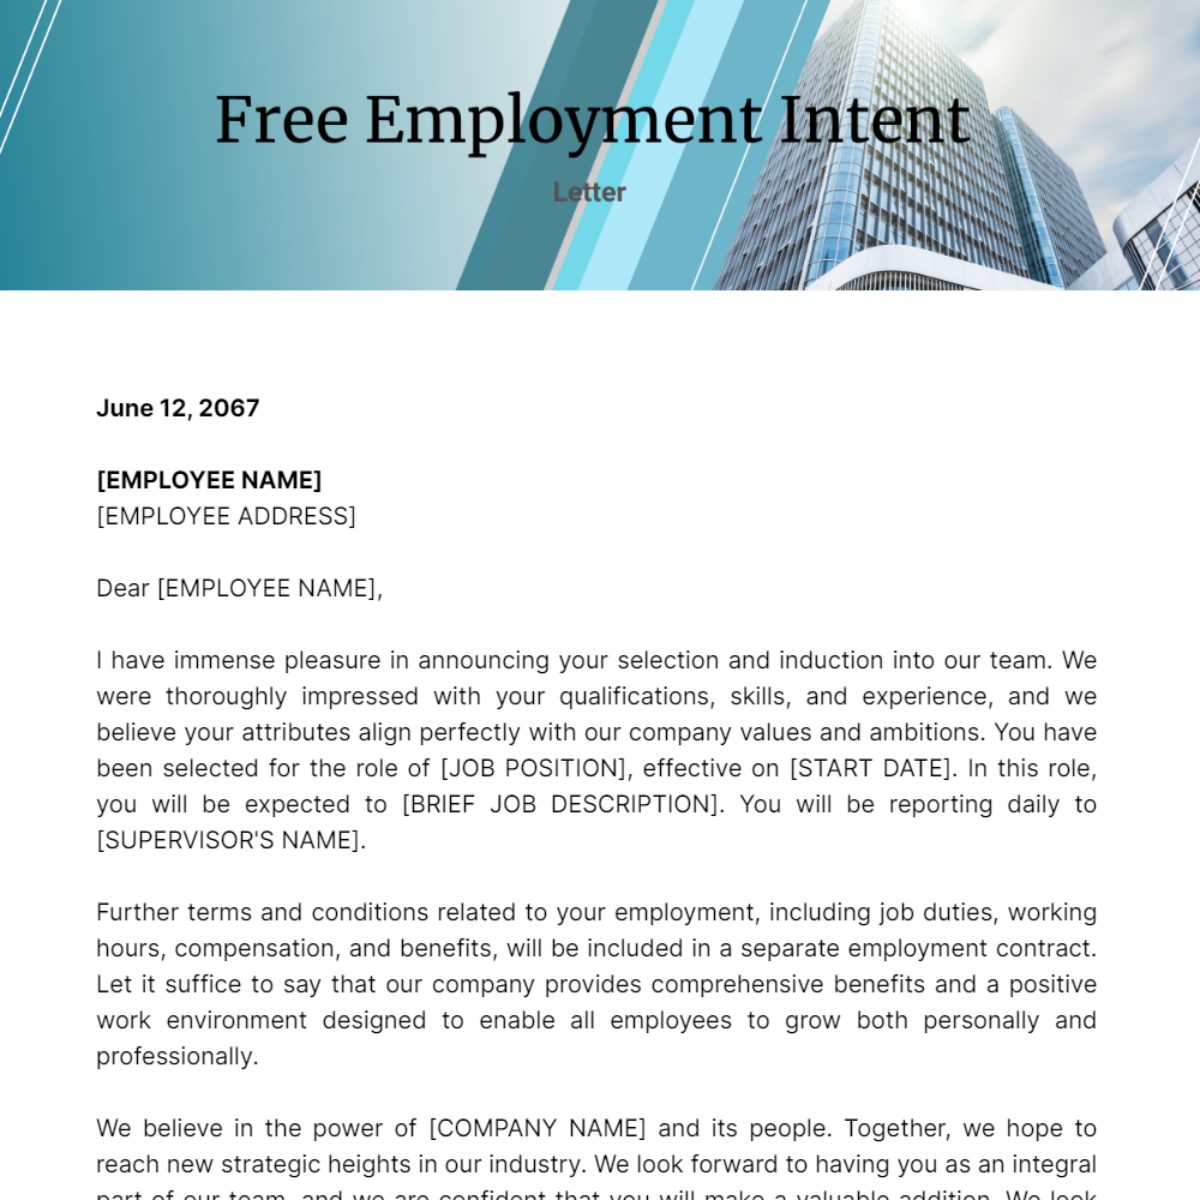 Employment Intent Letter Template